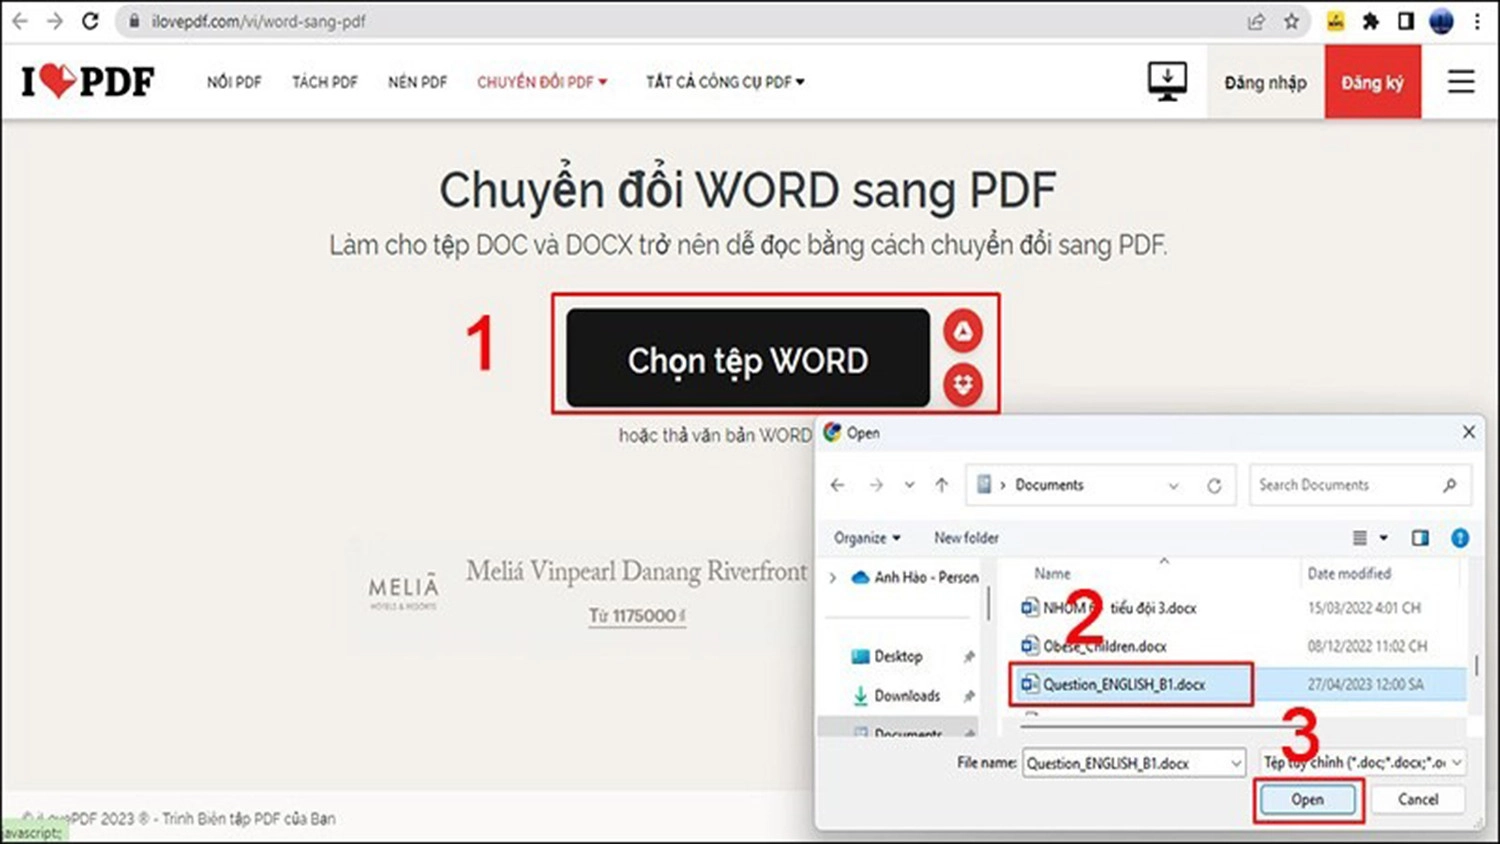 chuyen-doi-word-sang-pdf-an-chon-tep-word